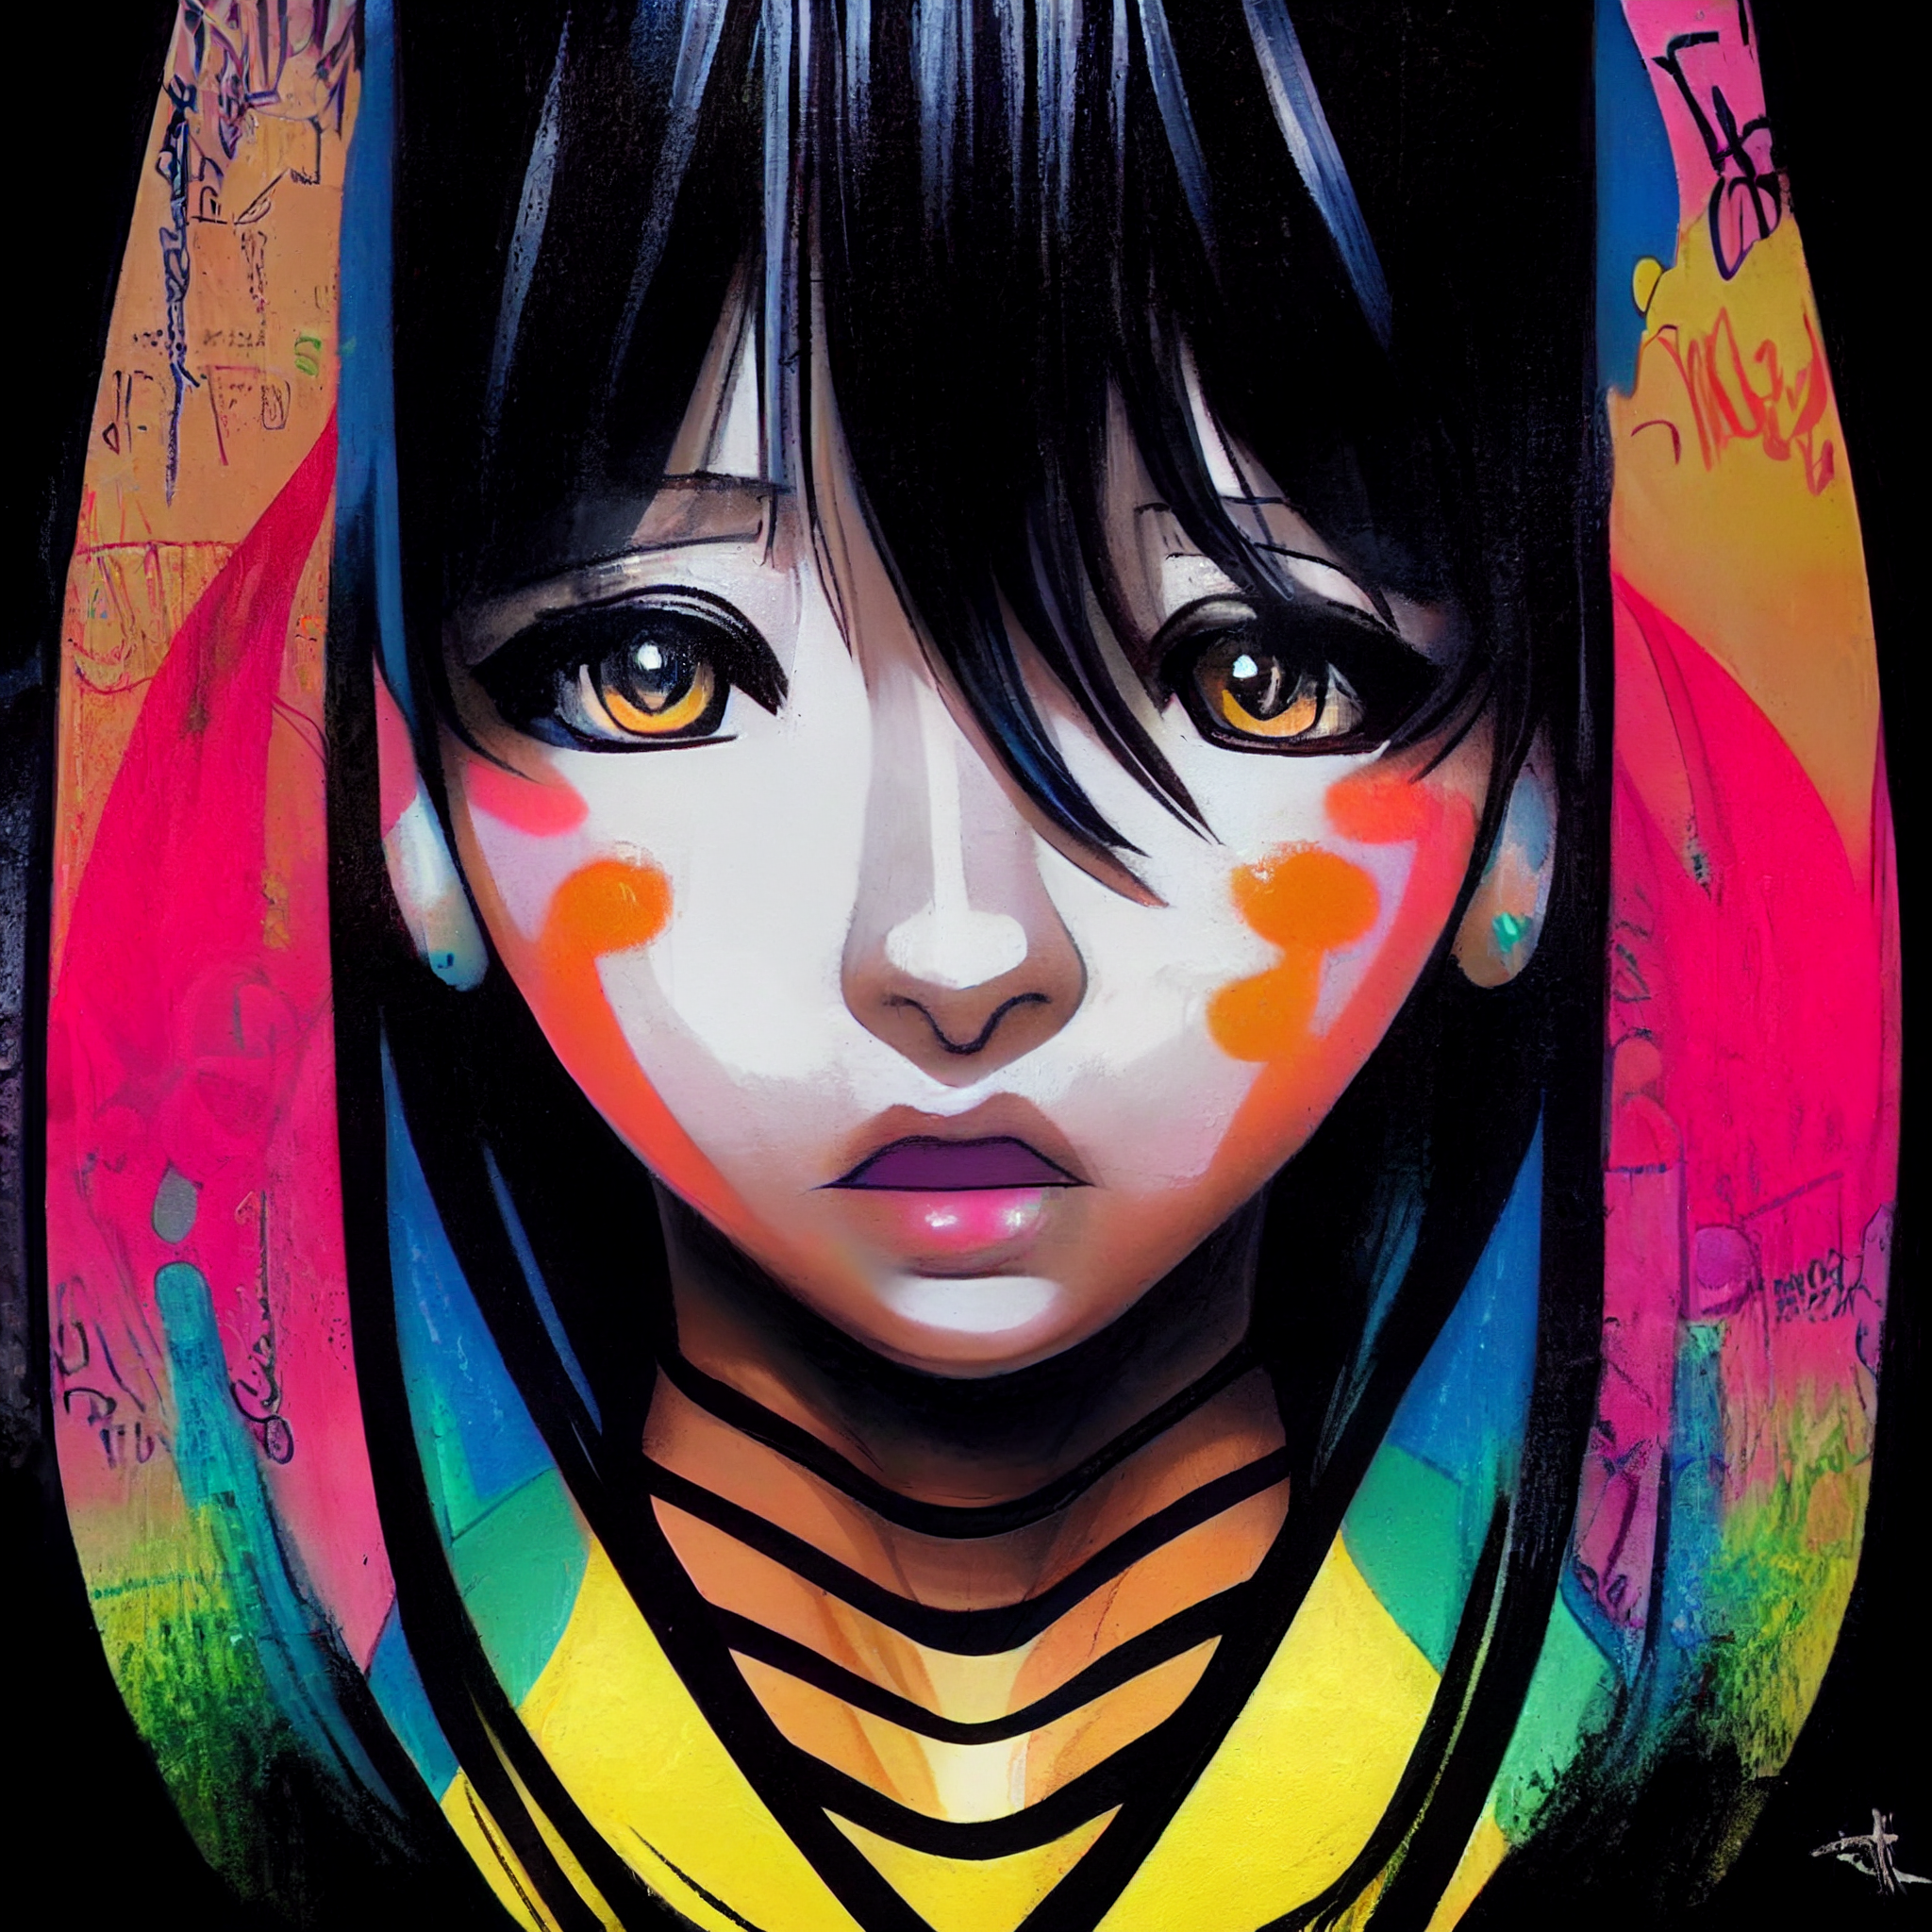 Anime graffiti girl by AnimeGeorge2001 on DeviantArt